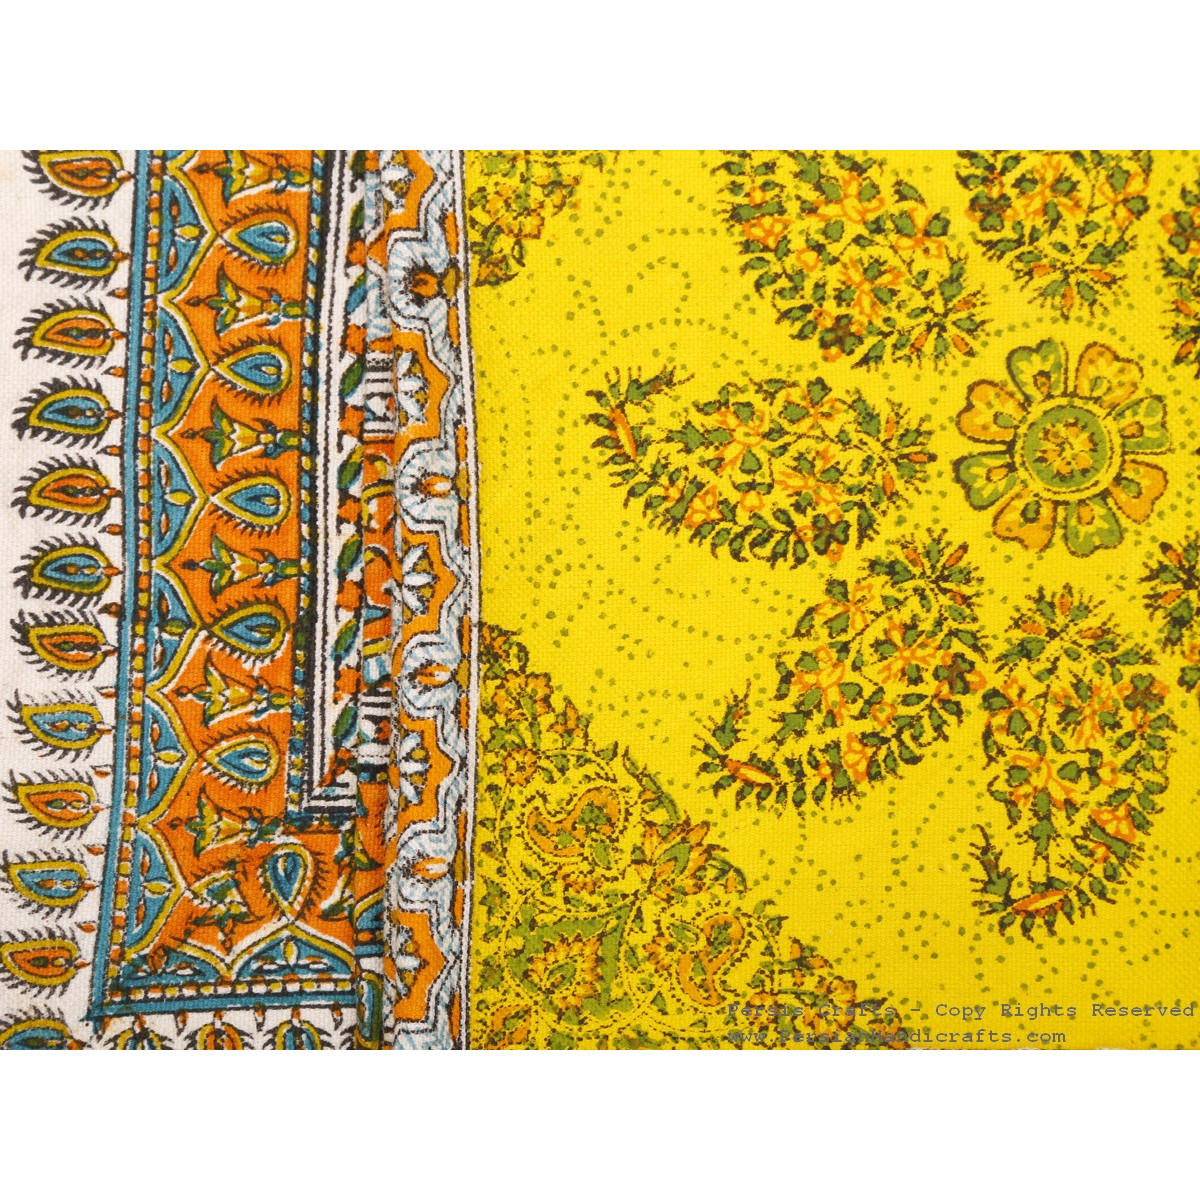 Persian Tapestry (Ghalamkar) Tablecloth - HGH3073-Persian Handicrafts